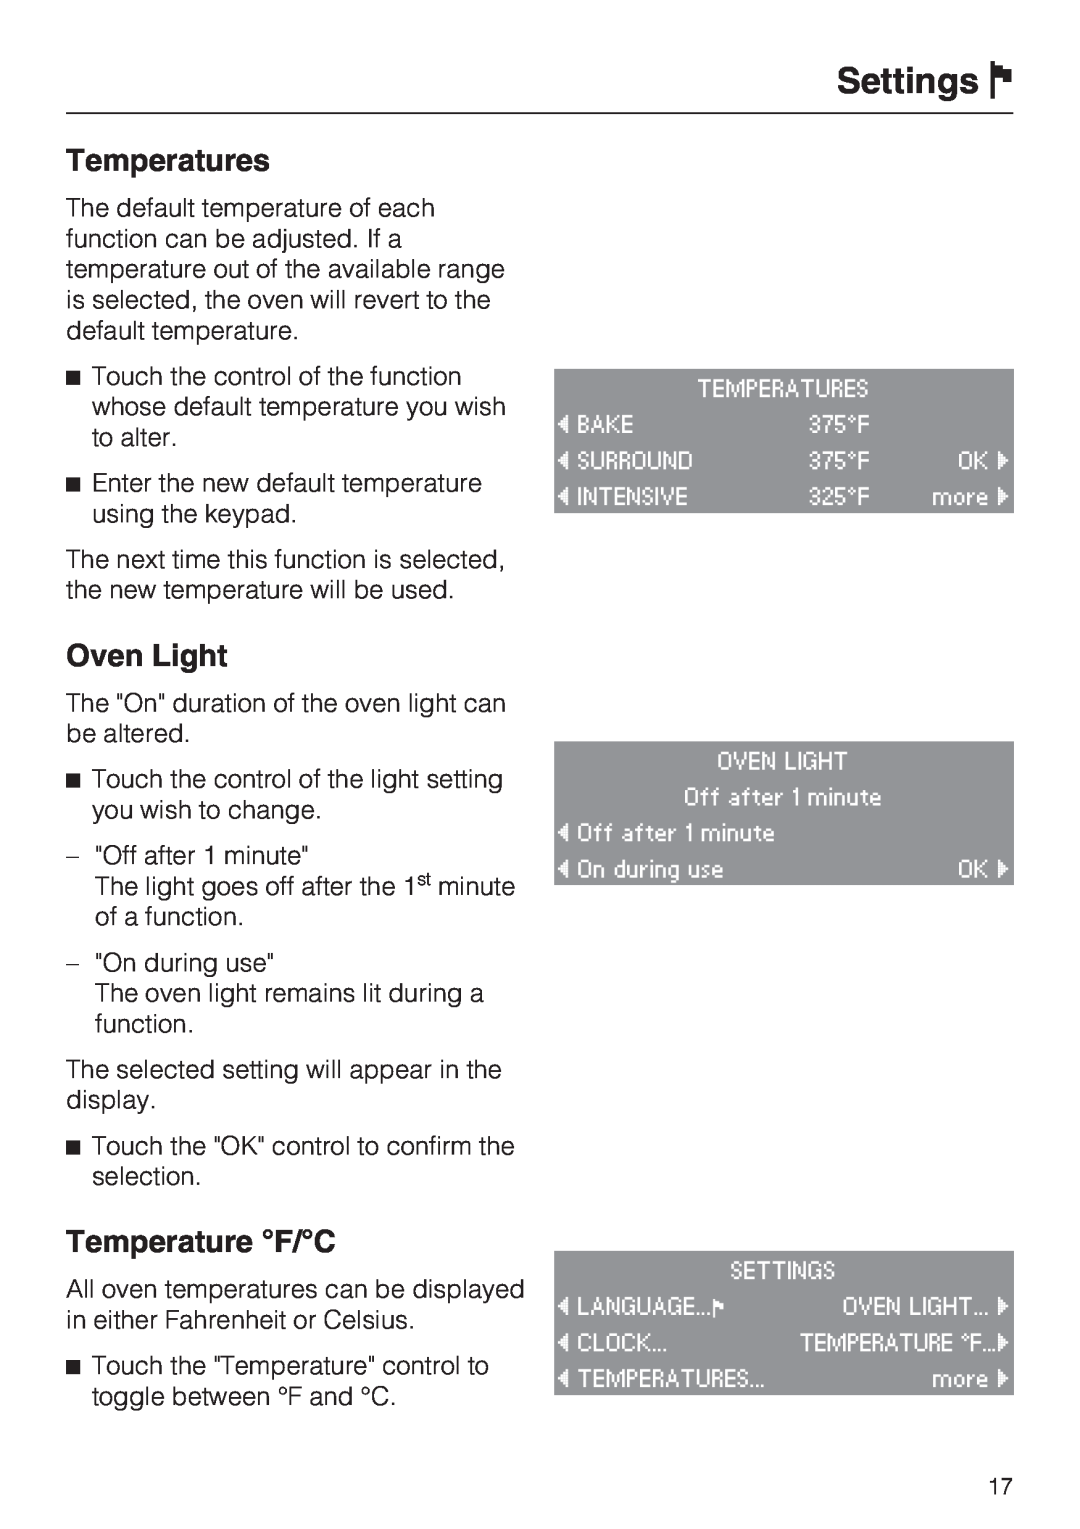 Miele H4082BM, H 4088 BM installation instructions Temperatures, Oven Light, Temperature F/C, Settings 